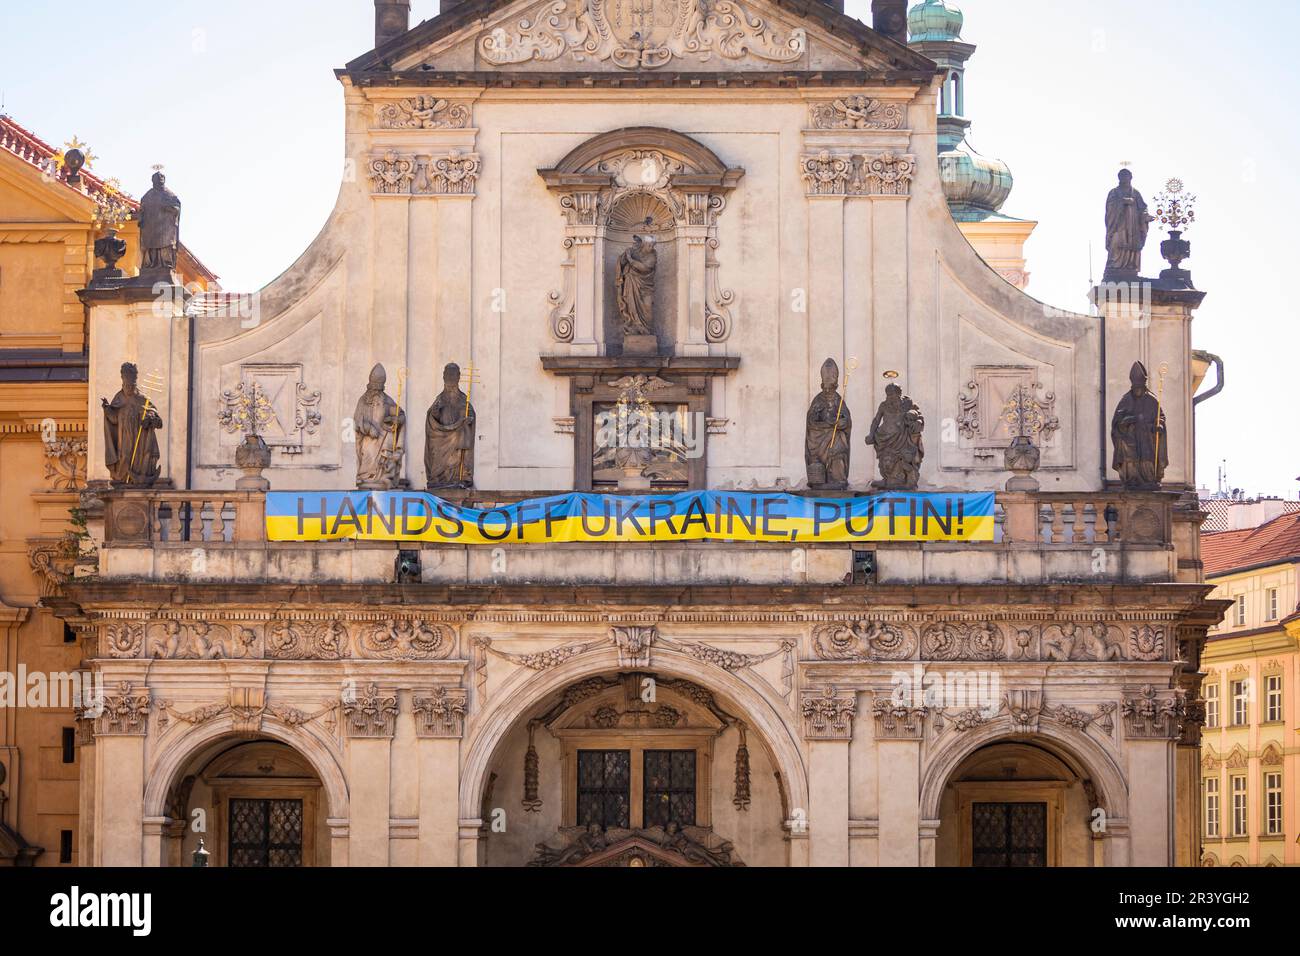 PRAGUE, CZECH REPUBLIC - Anti Putin banner supporting Ukraine, on building in Old Town. Hands off Ukraine Putin. Stock Photo